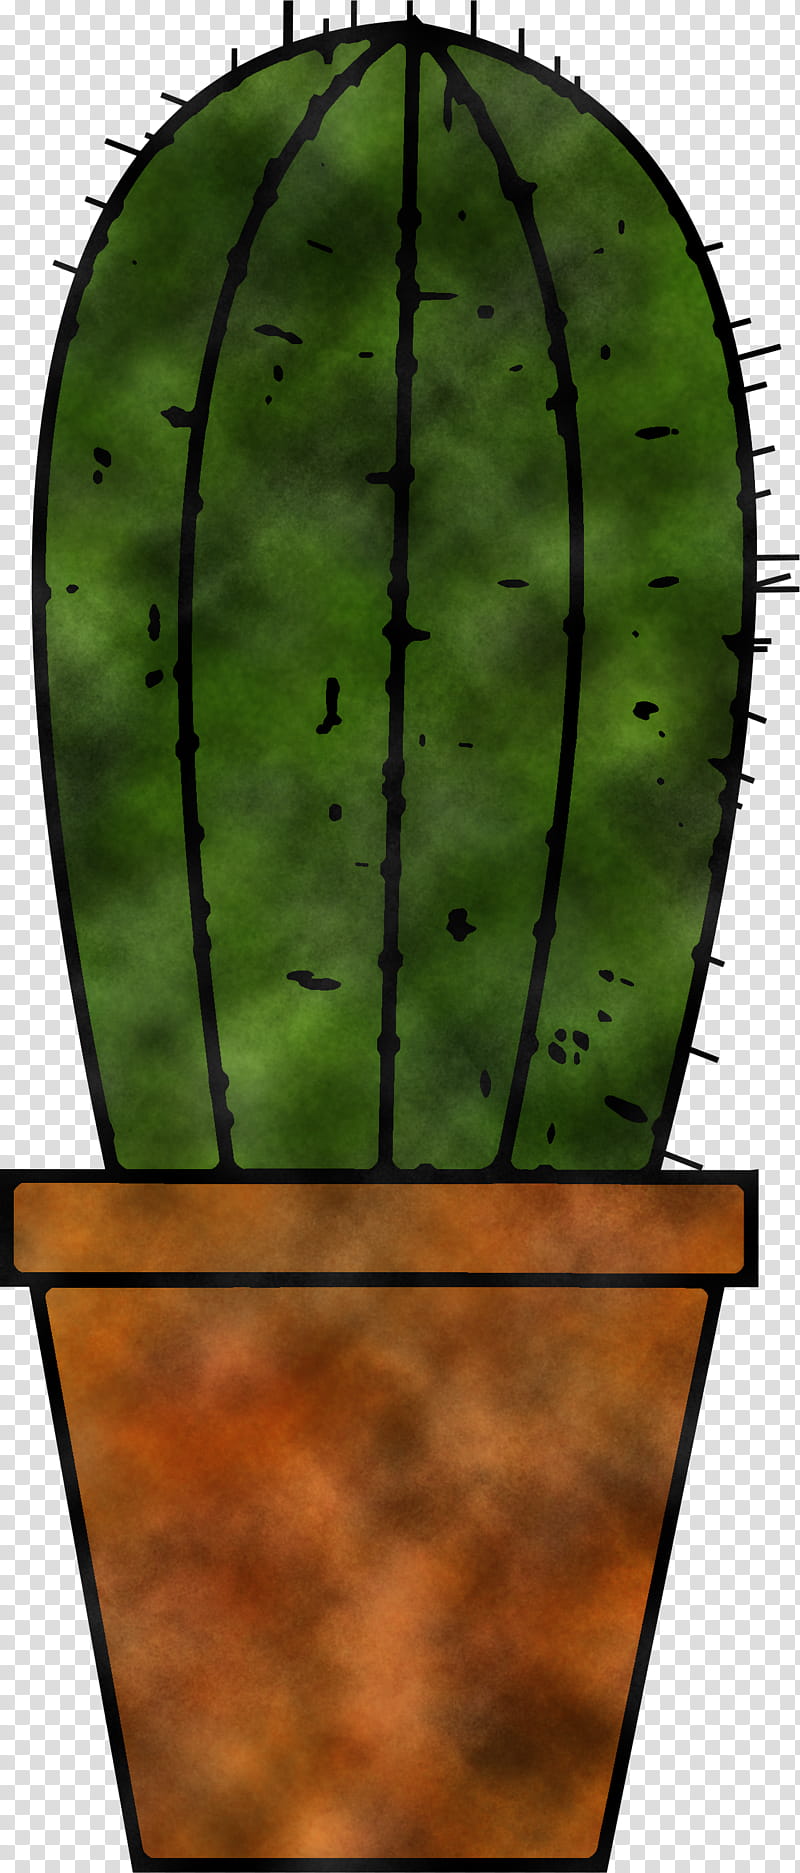 Cactus, Green, Watermelon, Plant, Tree, Skateboard, Longboard, Skateboarding Equipment transparent background PNG clipart